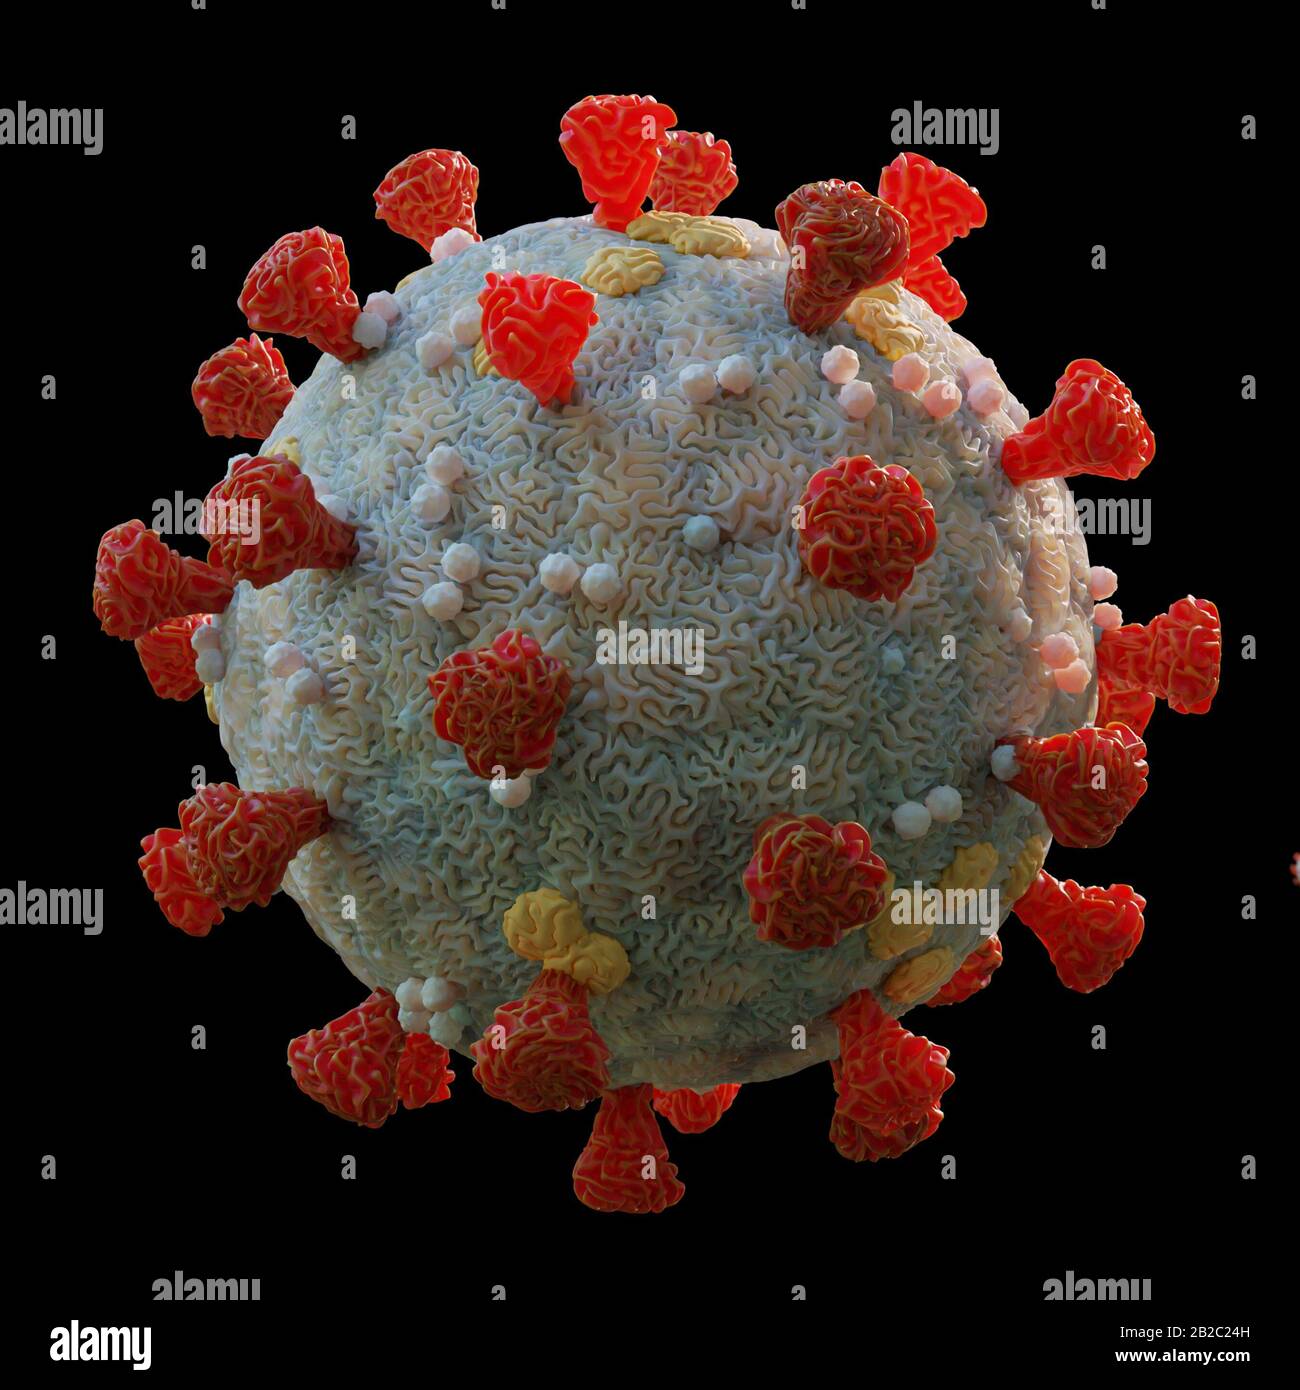 coronavirus, virus que causa enfermedades del resfriado común a enfermedades más graves, aislado sobre fondo negro Foto de stock